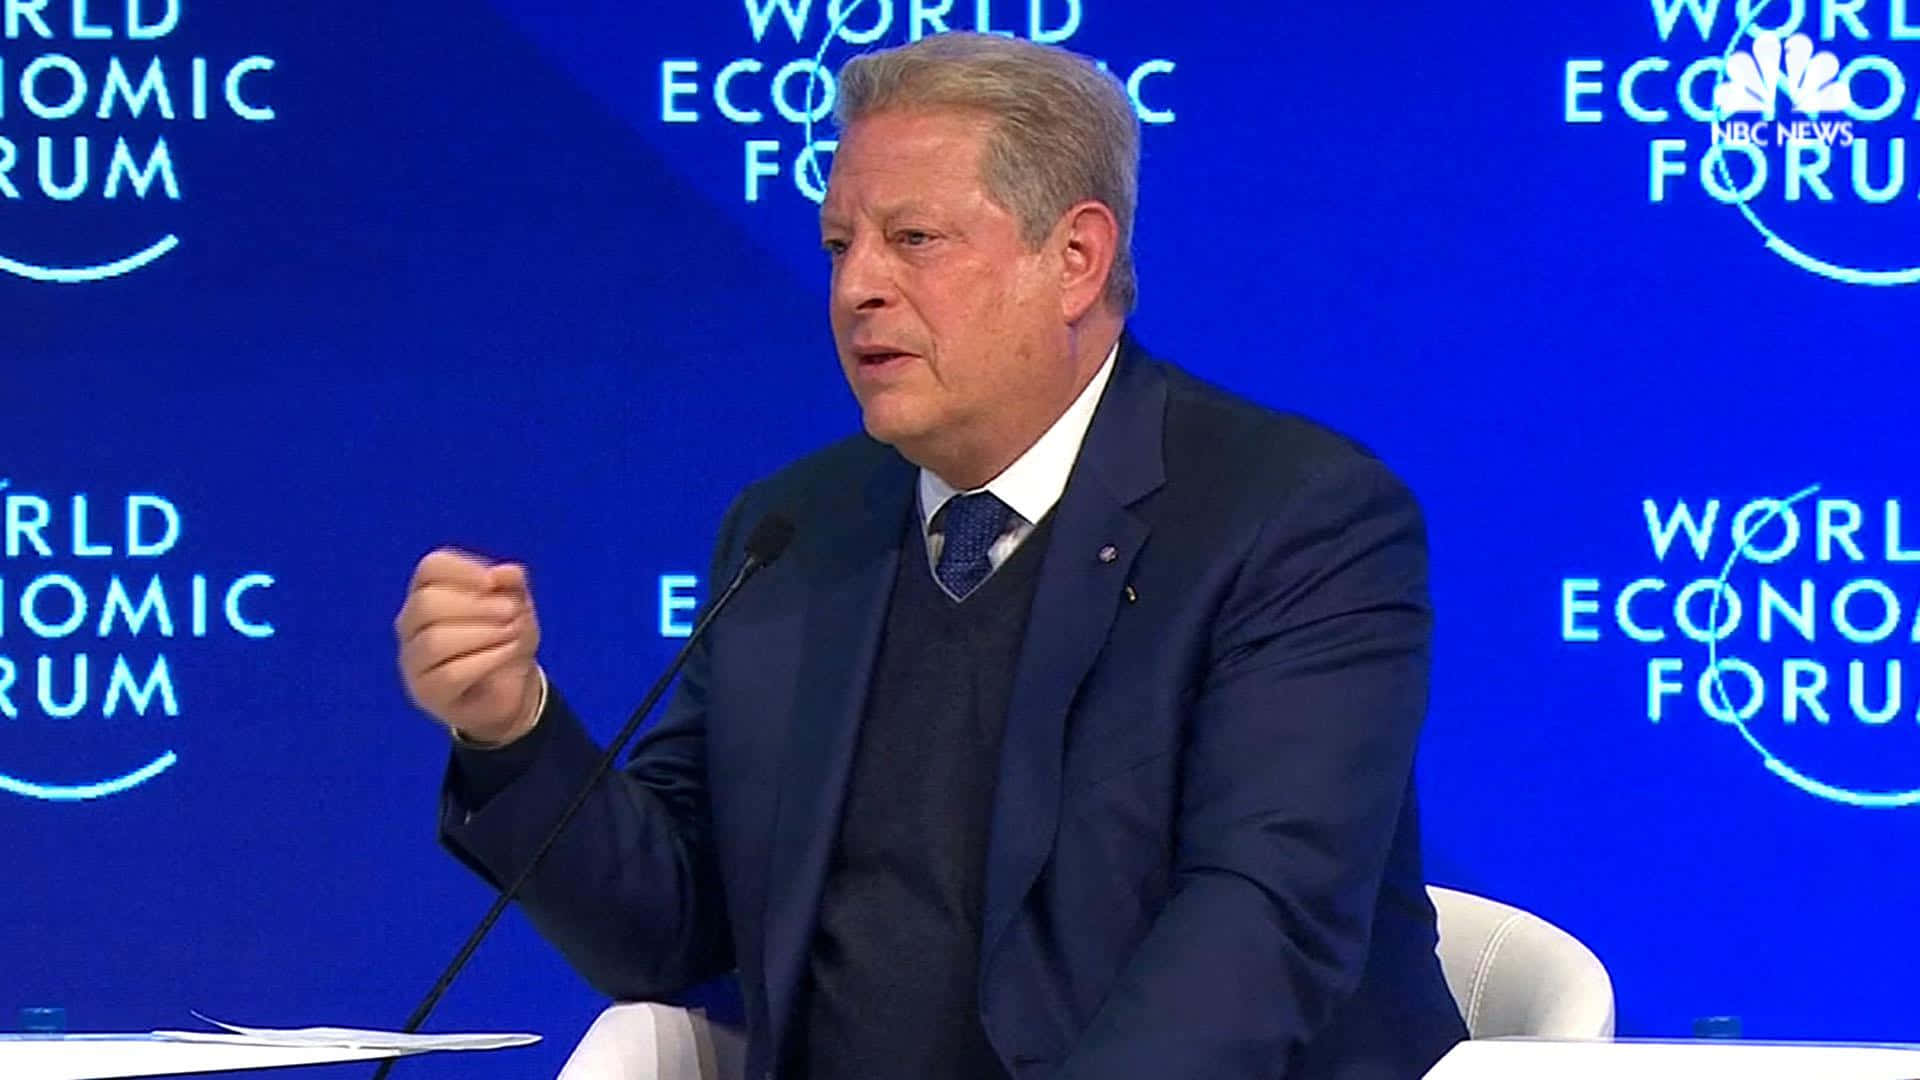 Al Gore Speaking At The World Economic Forum Wallpaper